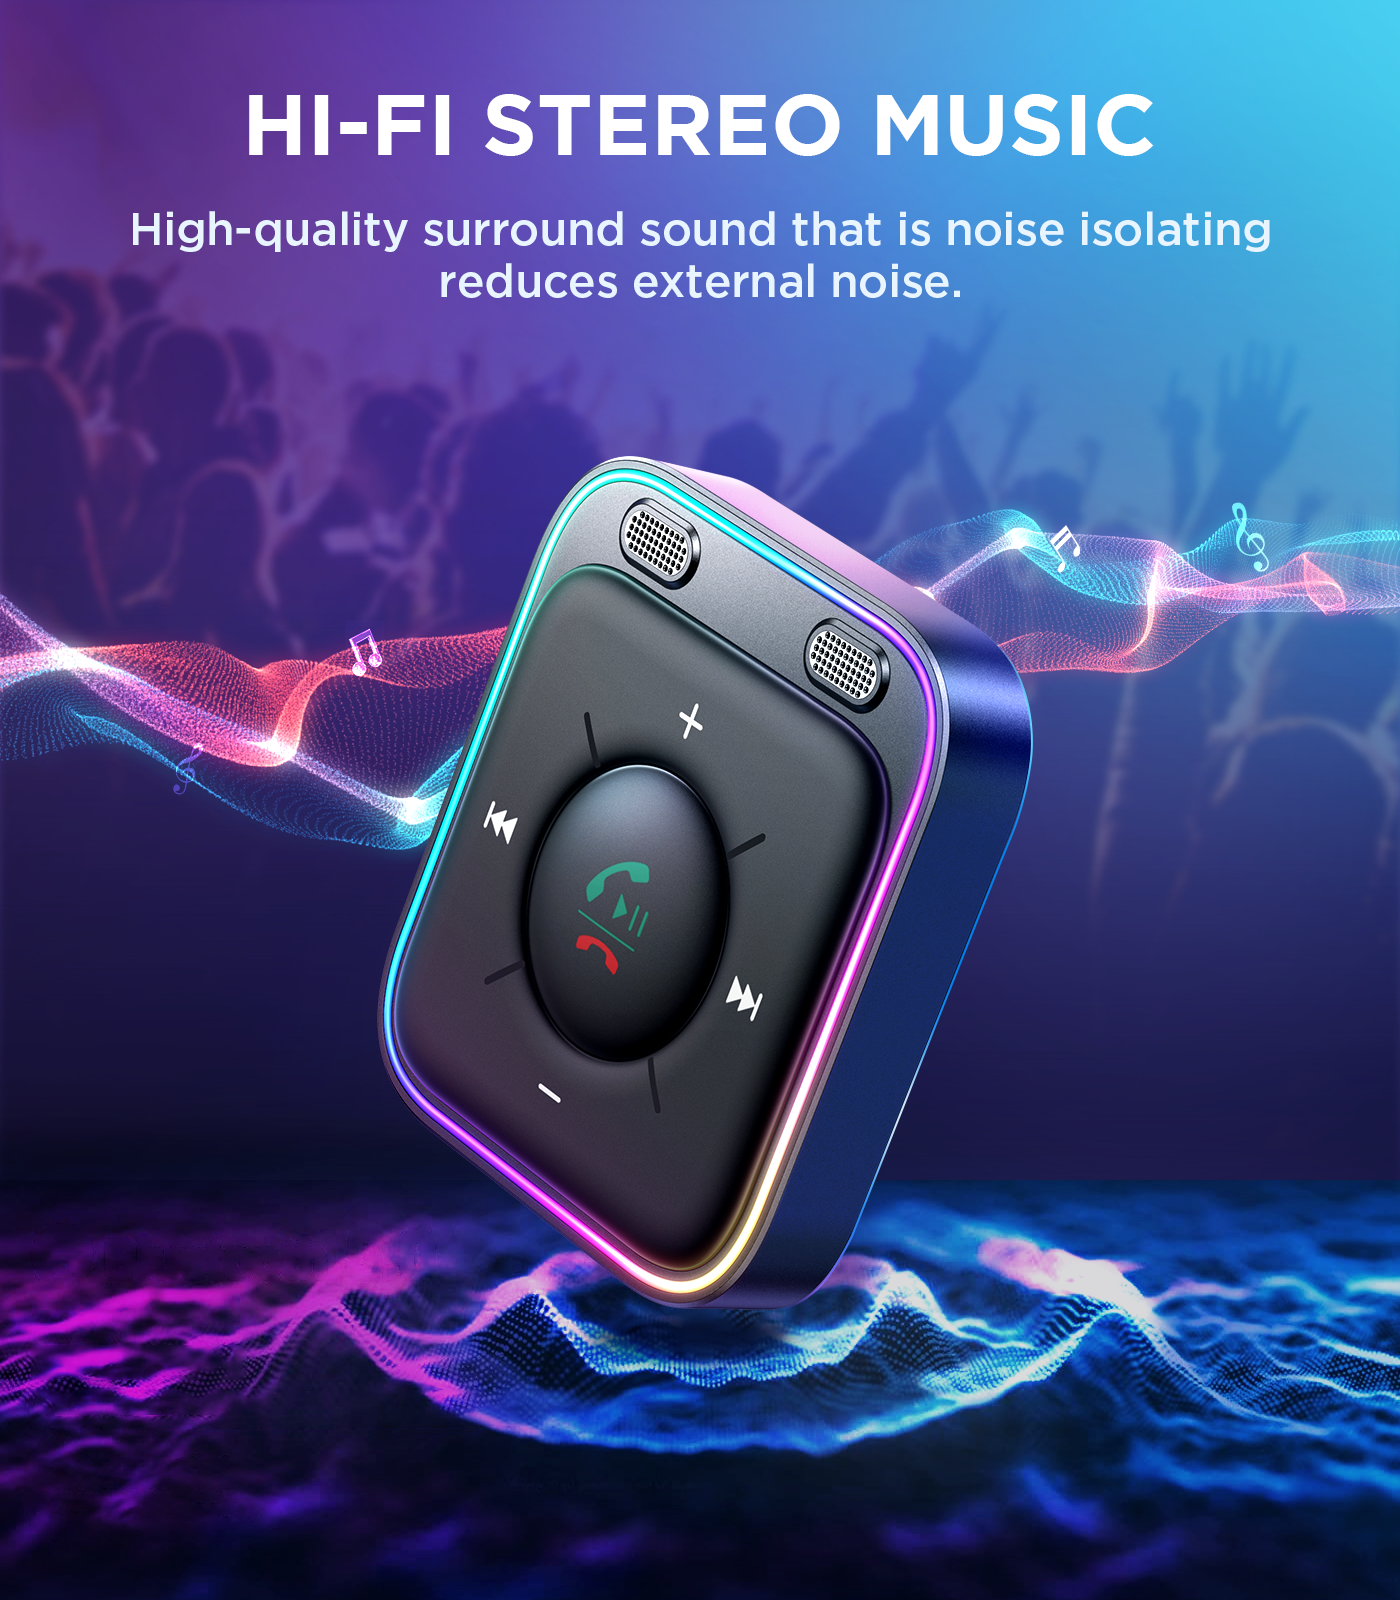 Universal Bluetooth 5,0 Konverter Auto Band MP3/SBC/Stereo